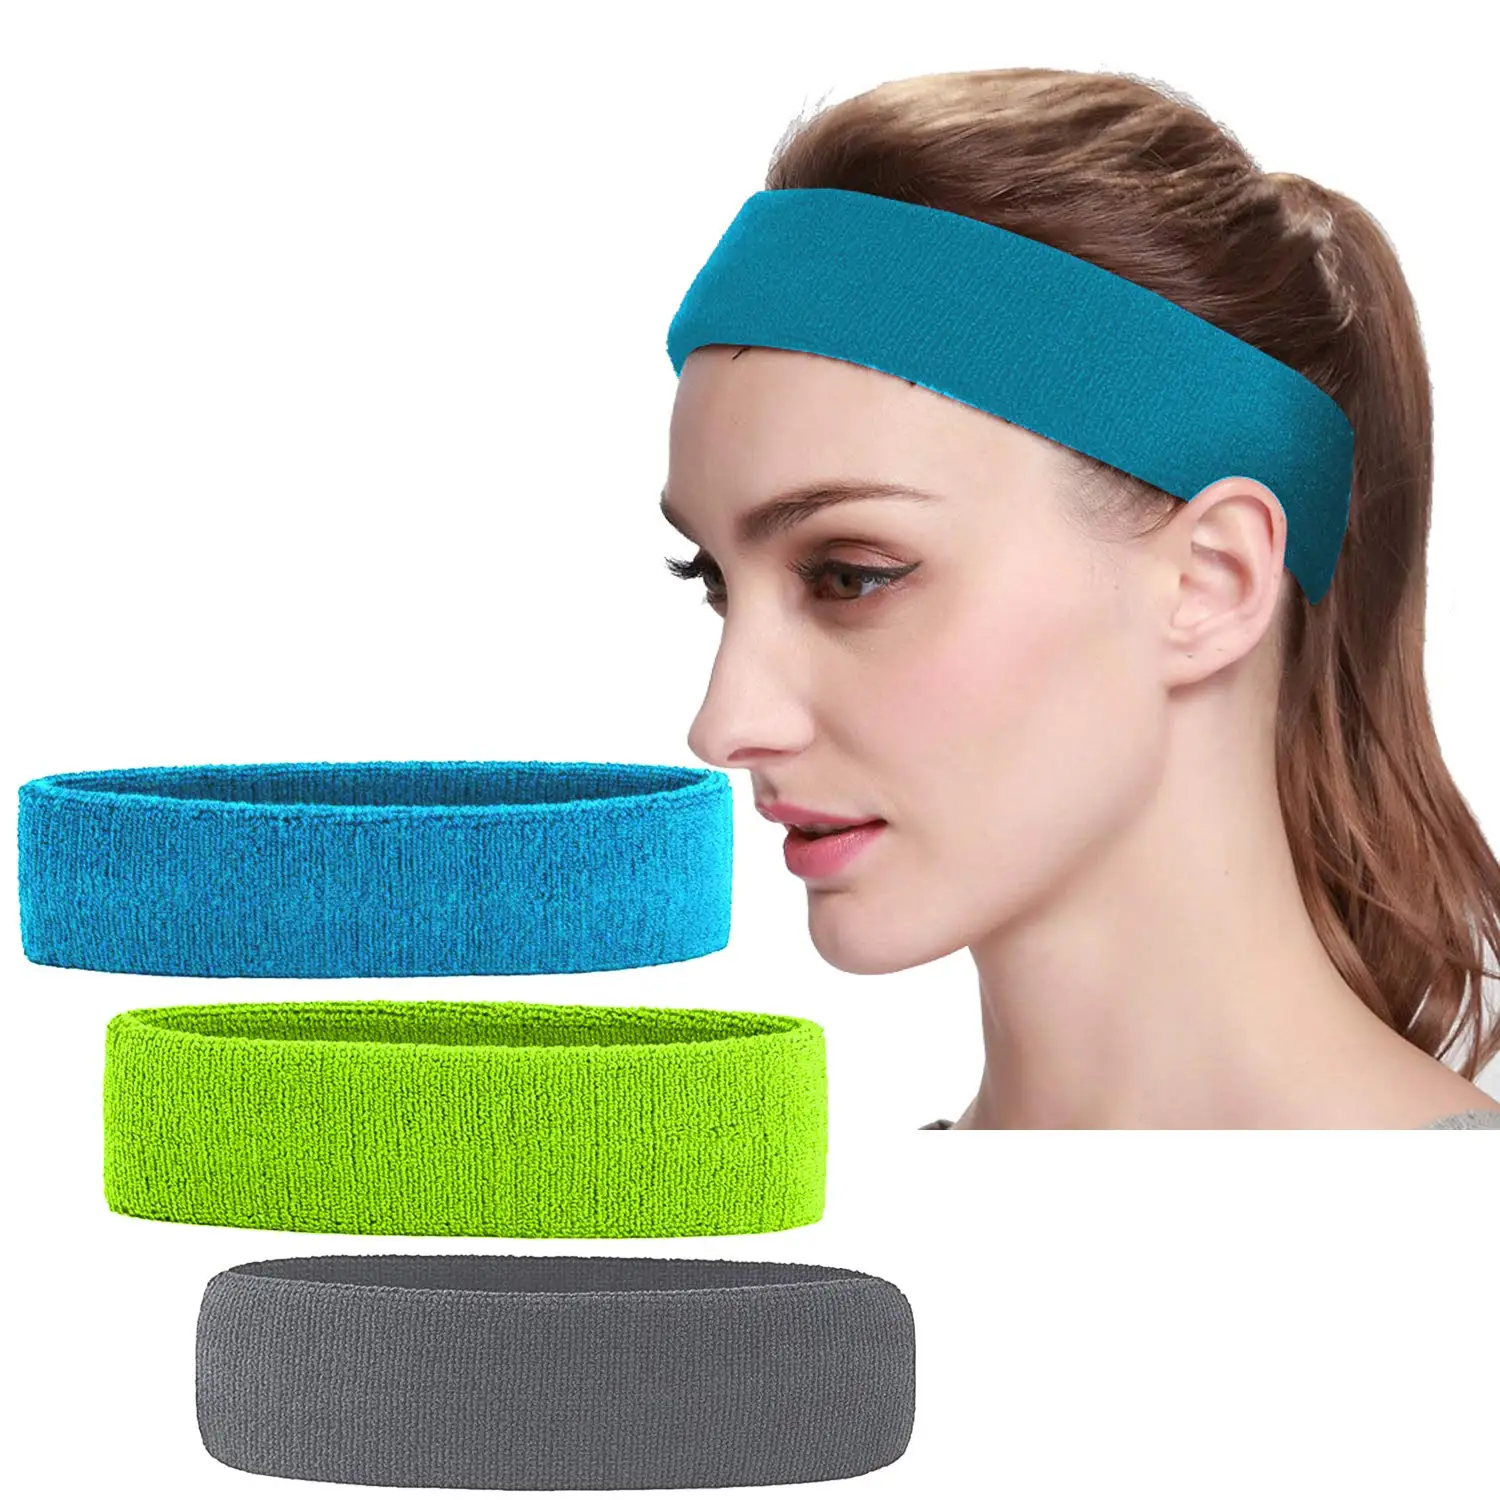 Men & Women Sweatband Headband Terry Cloth Moisture Wicking for Sports,Tennis,Gym,Work Out 